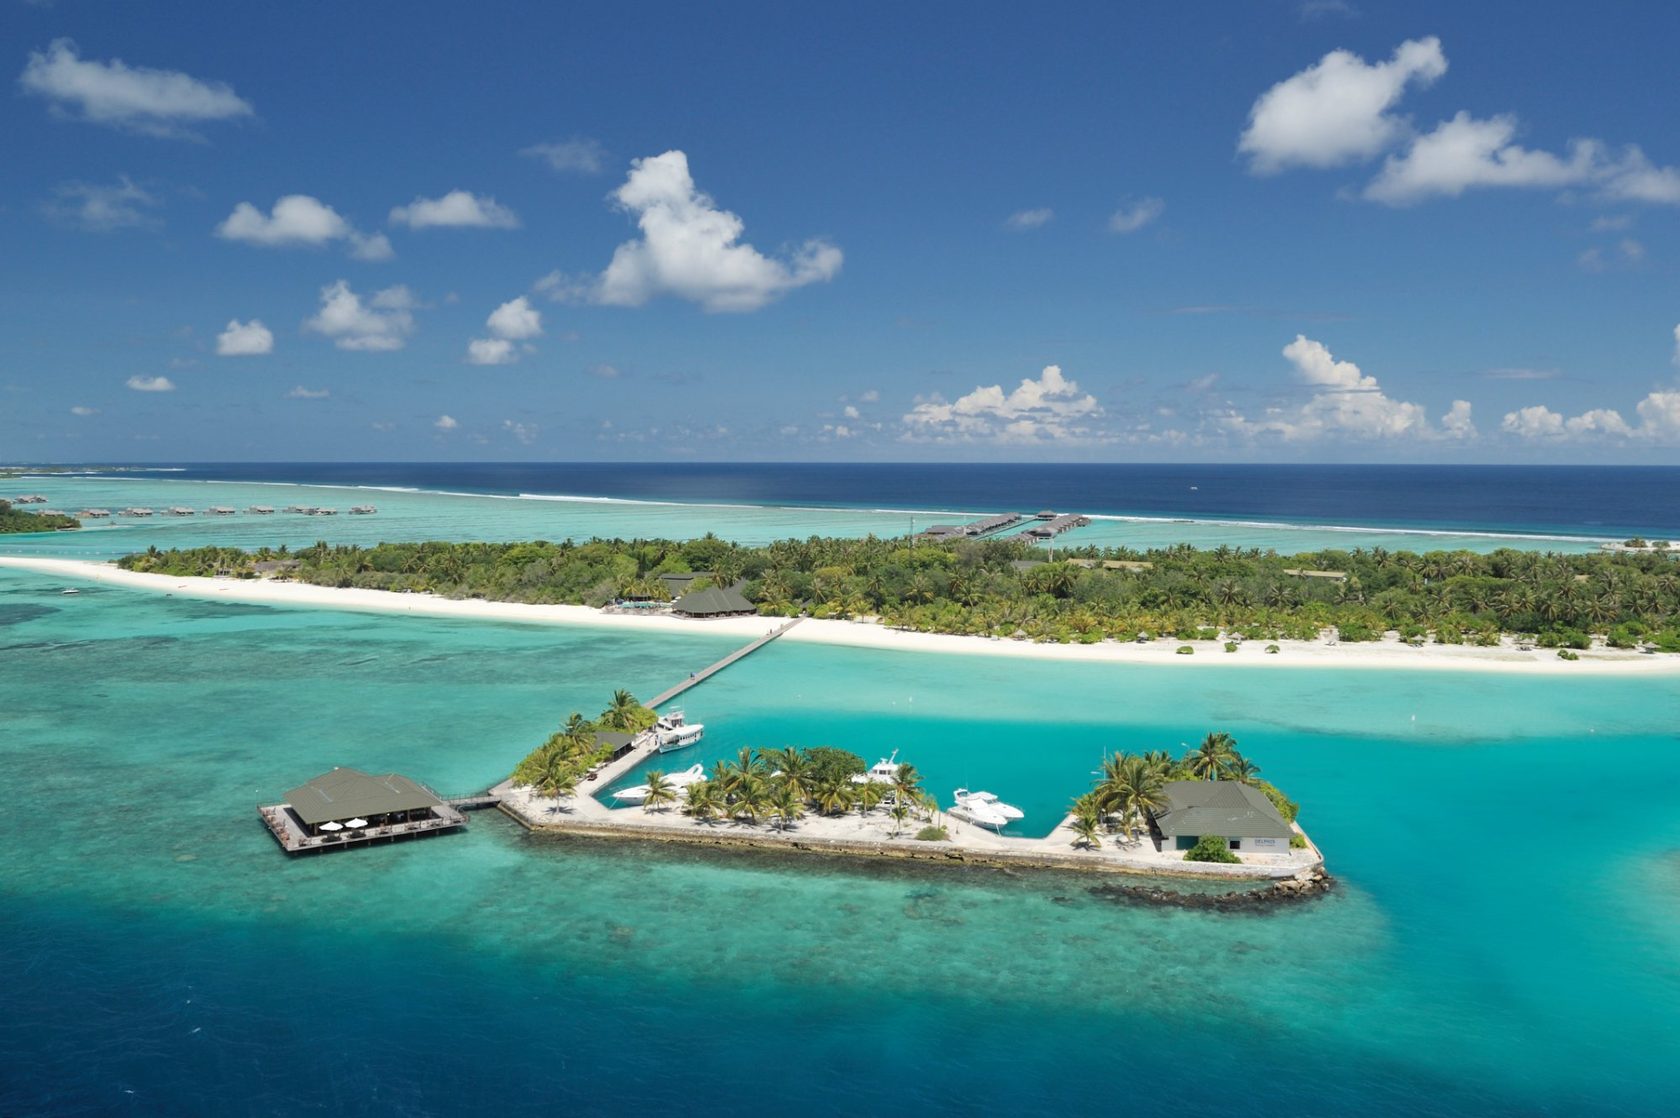 Html islands. Парадиз Исланд Резорт Мальдивы. Paradise Island Resort Spa 5 Мальдивы. Отеля Парадайз Айленд Резорт Мальдивы. Остров Ланканфинолу Мальдивы.